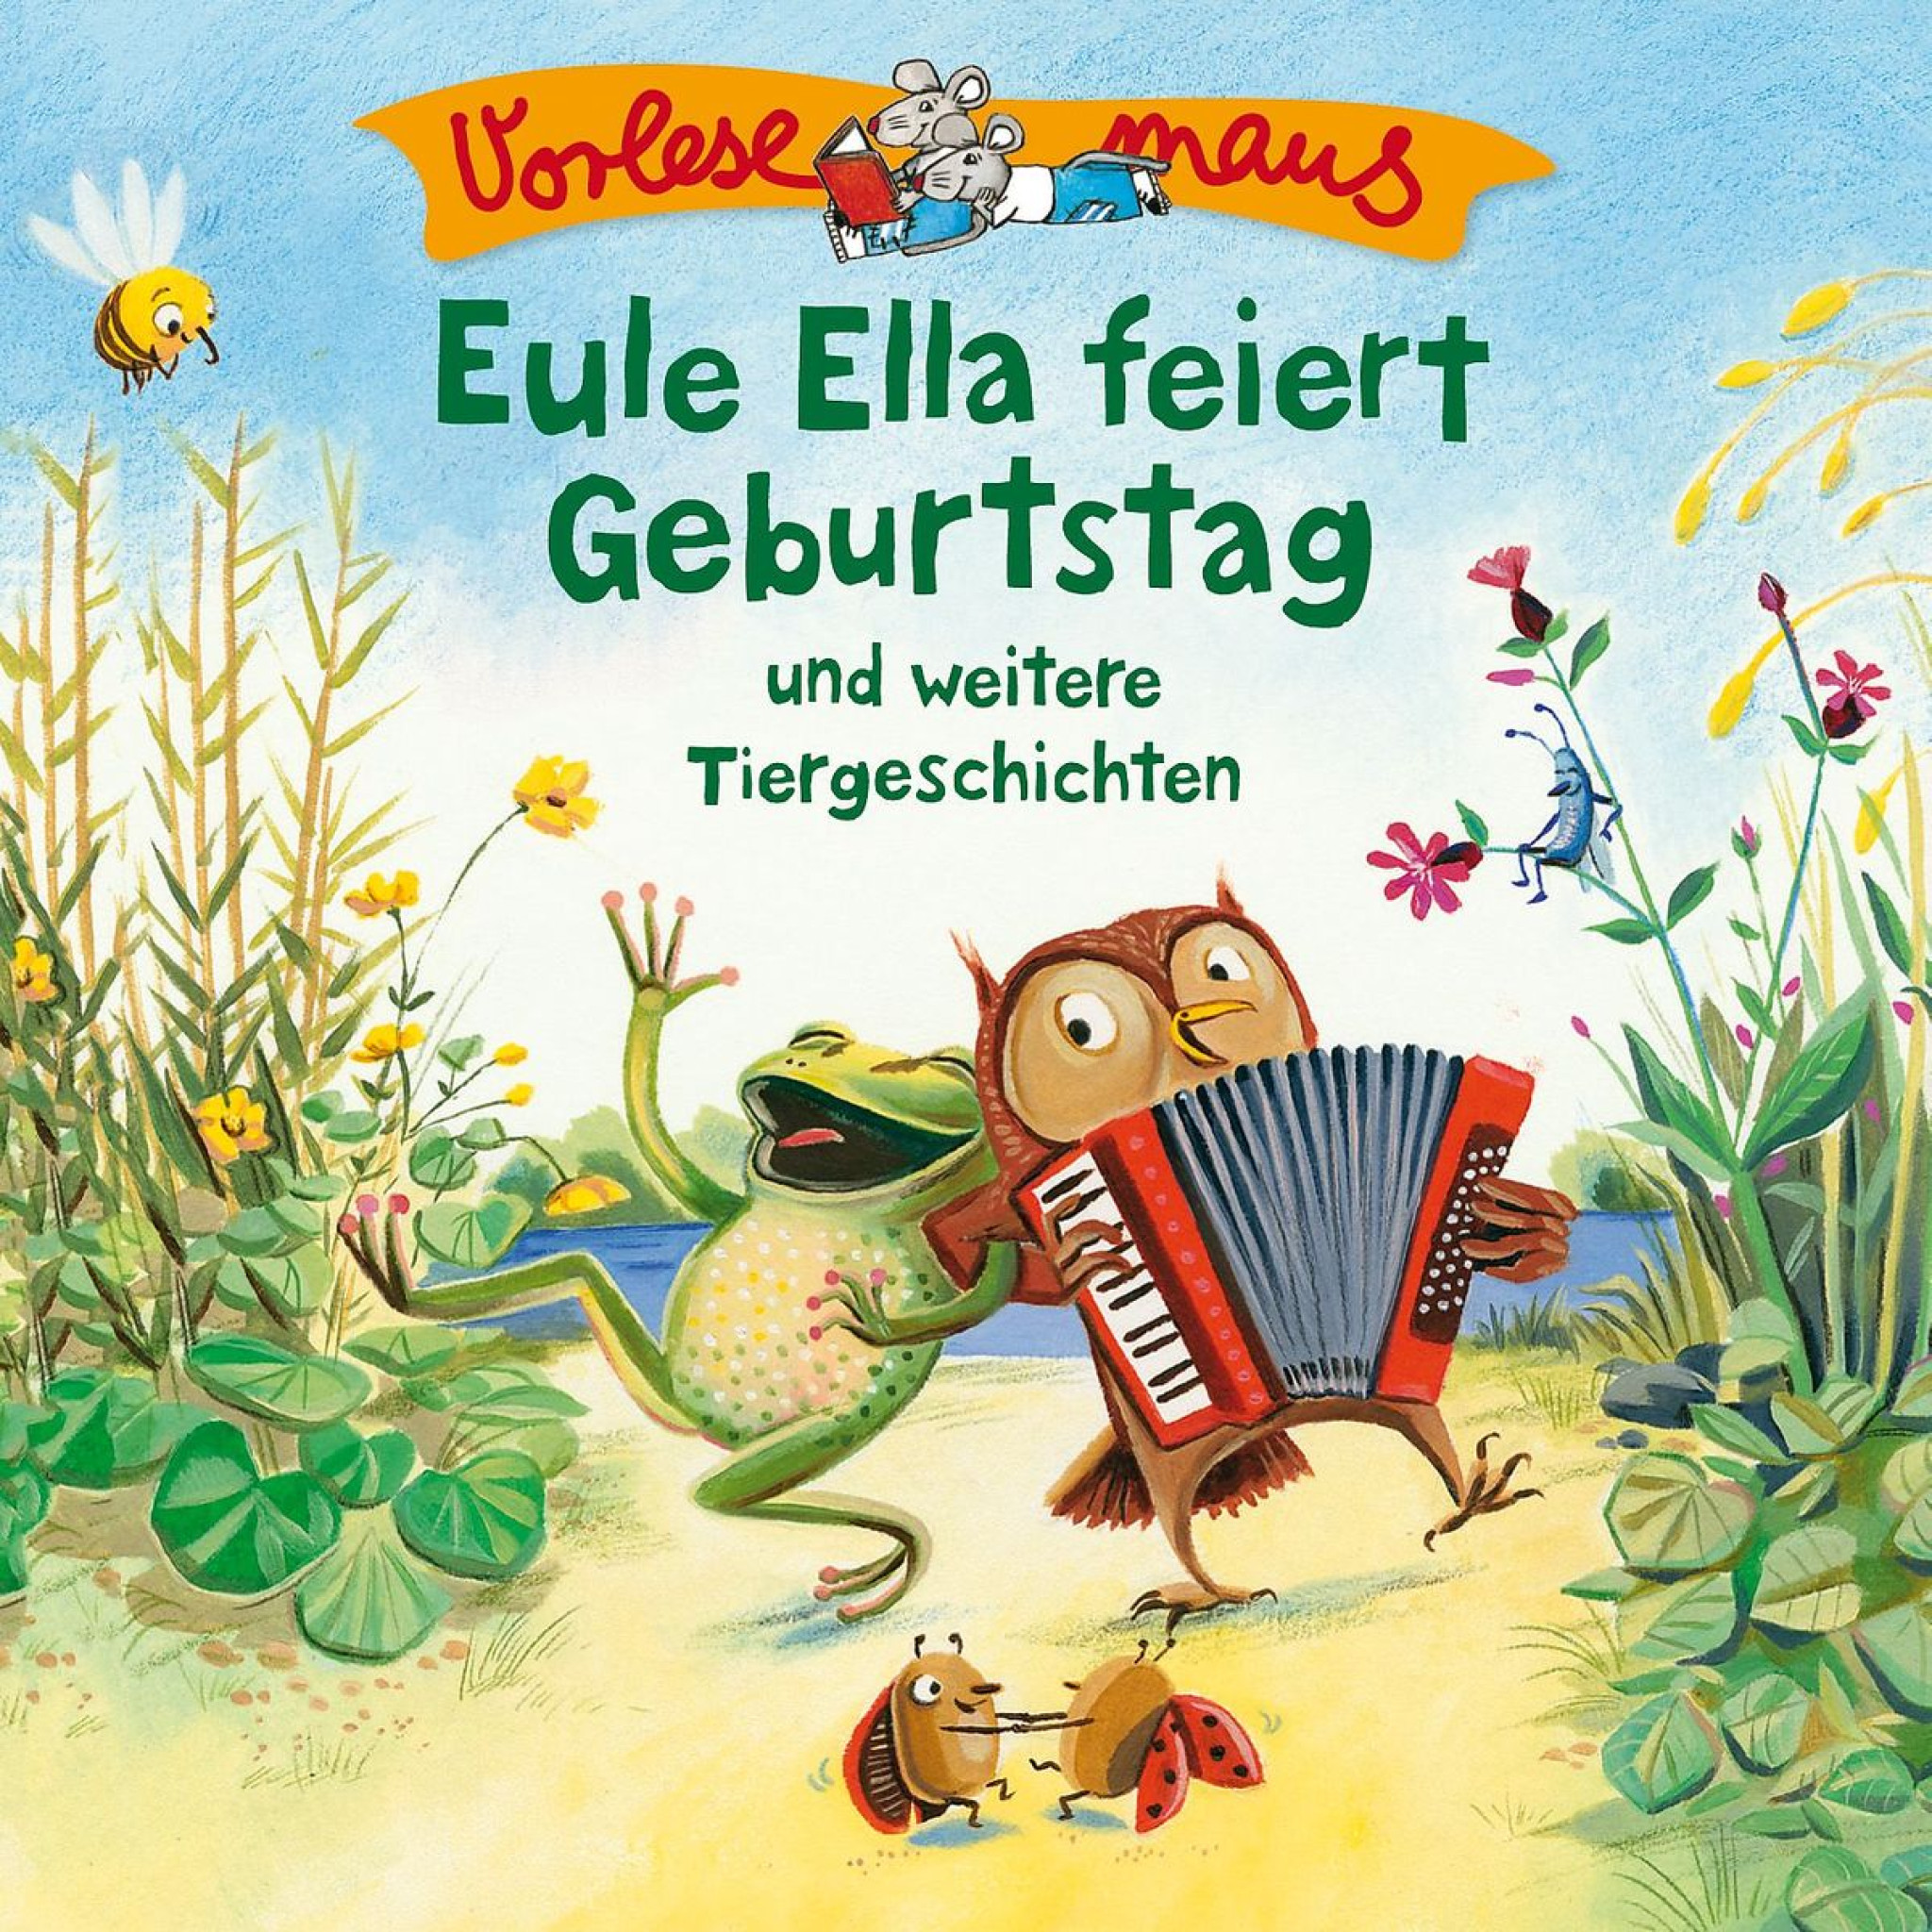 Eule Ella feiert Geburtstag (Tiergeschichten)